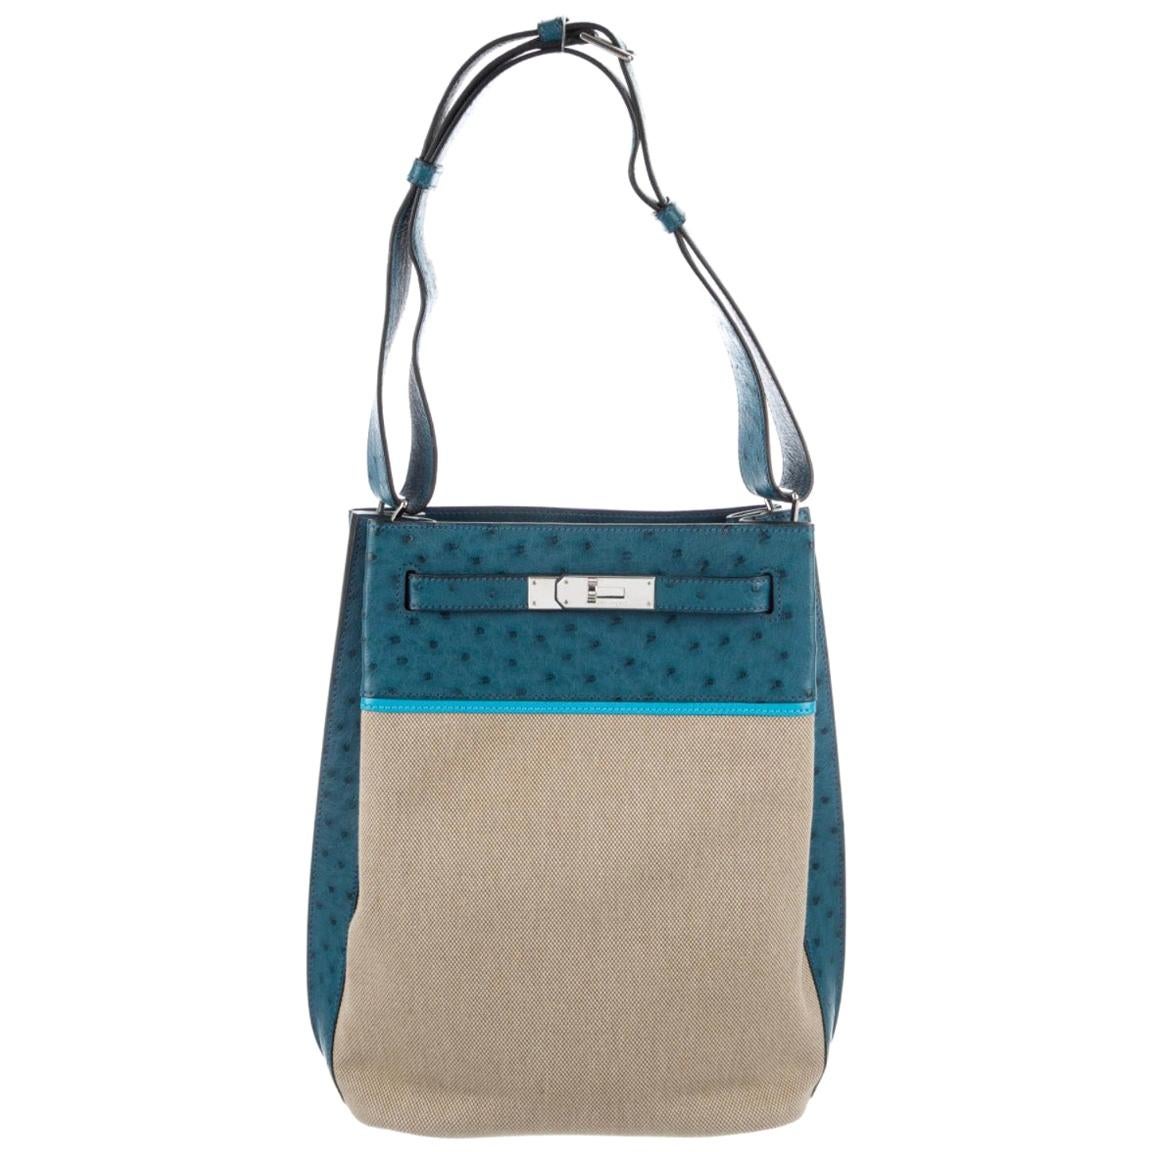 Hermes Blue Tan Canvas Exotic Leather Kelly Travel Single Shoulder Carryall Bag